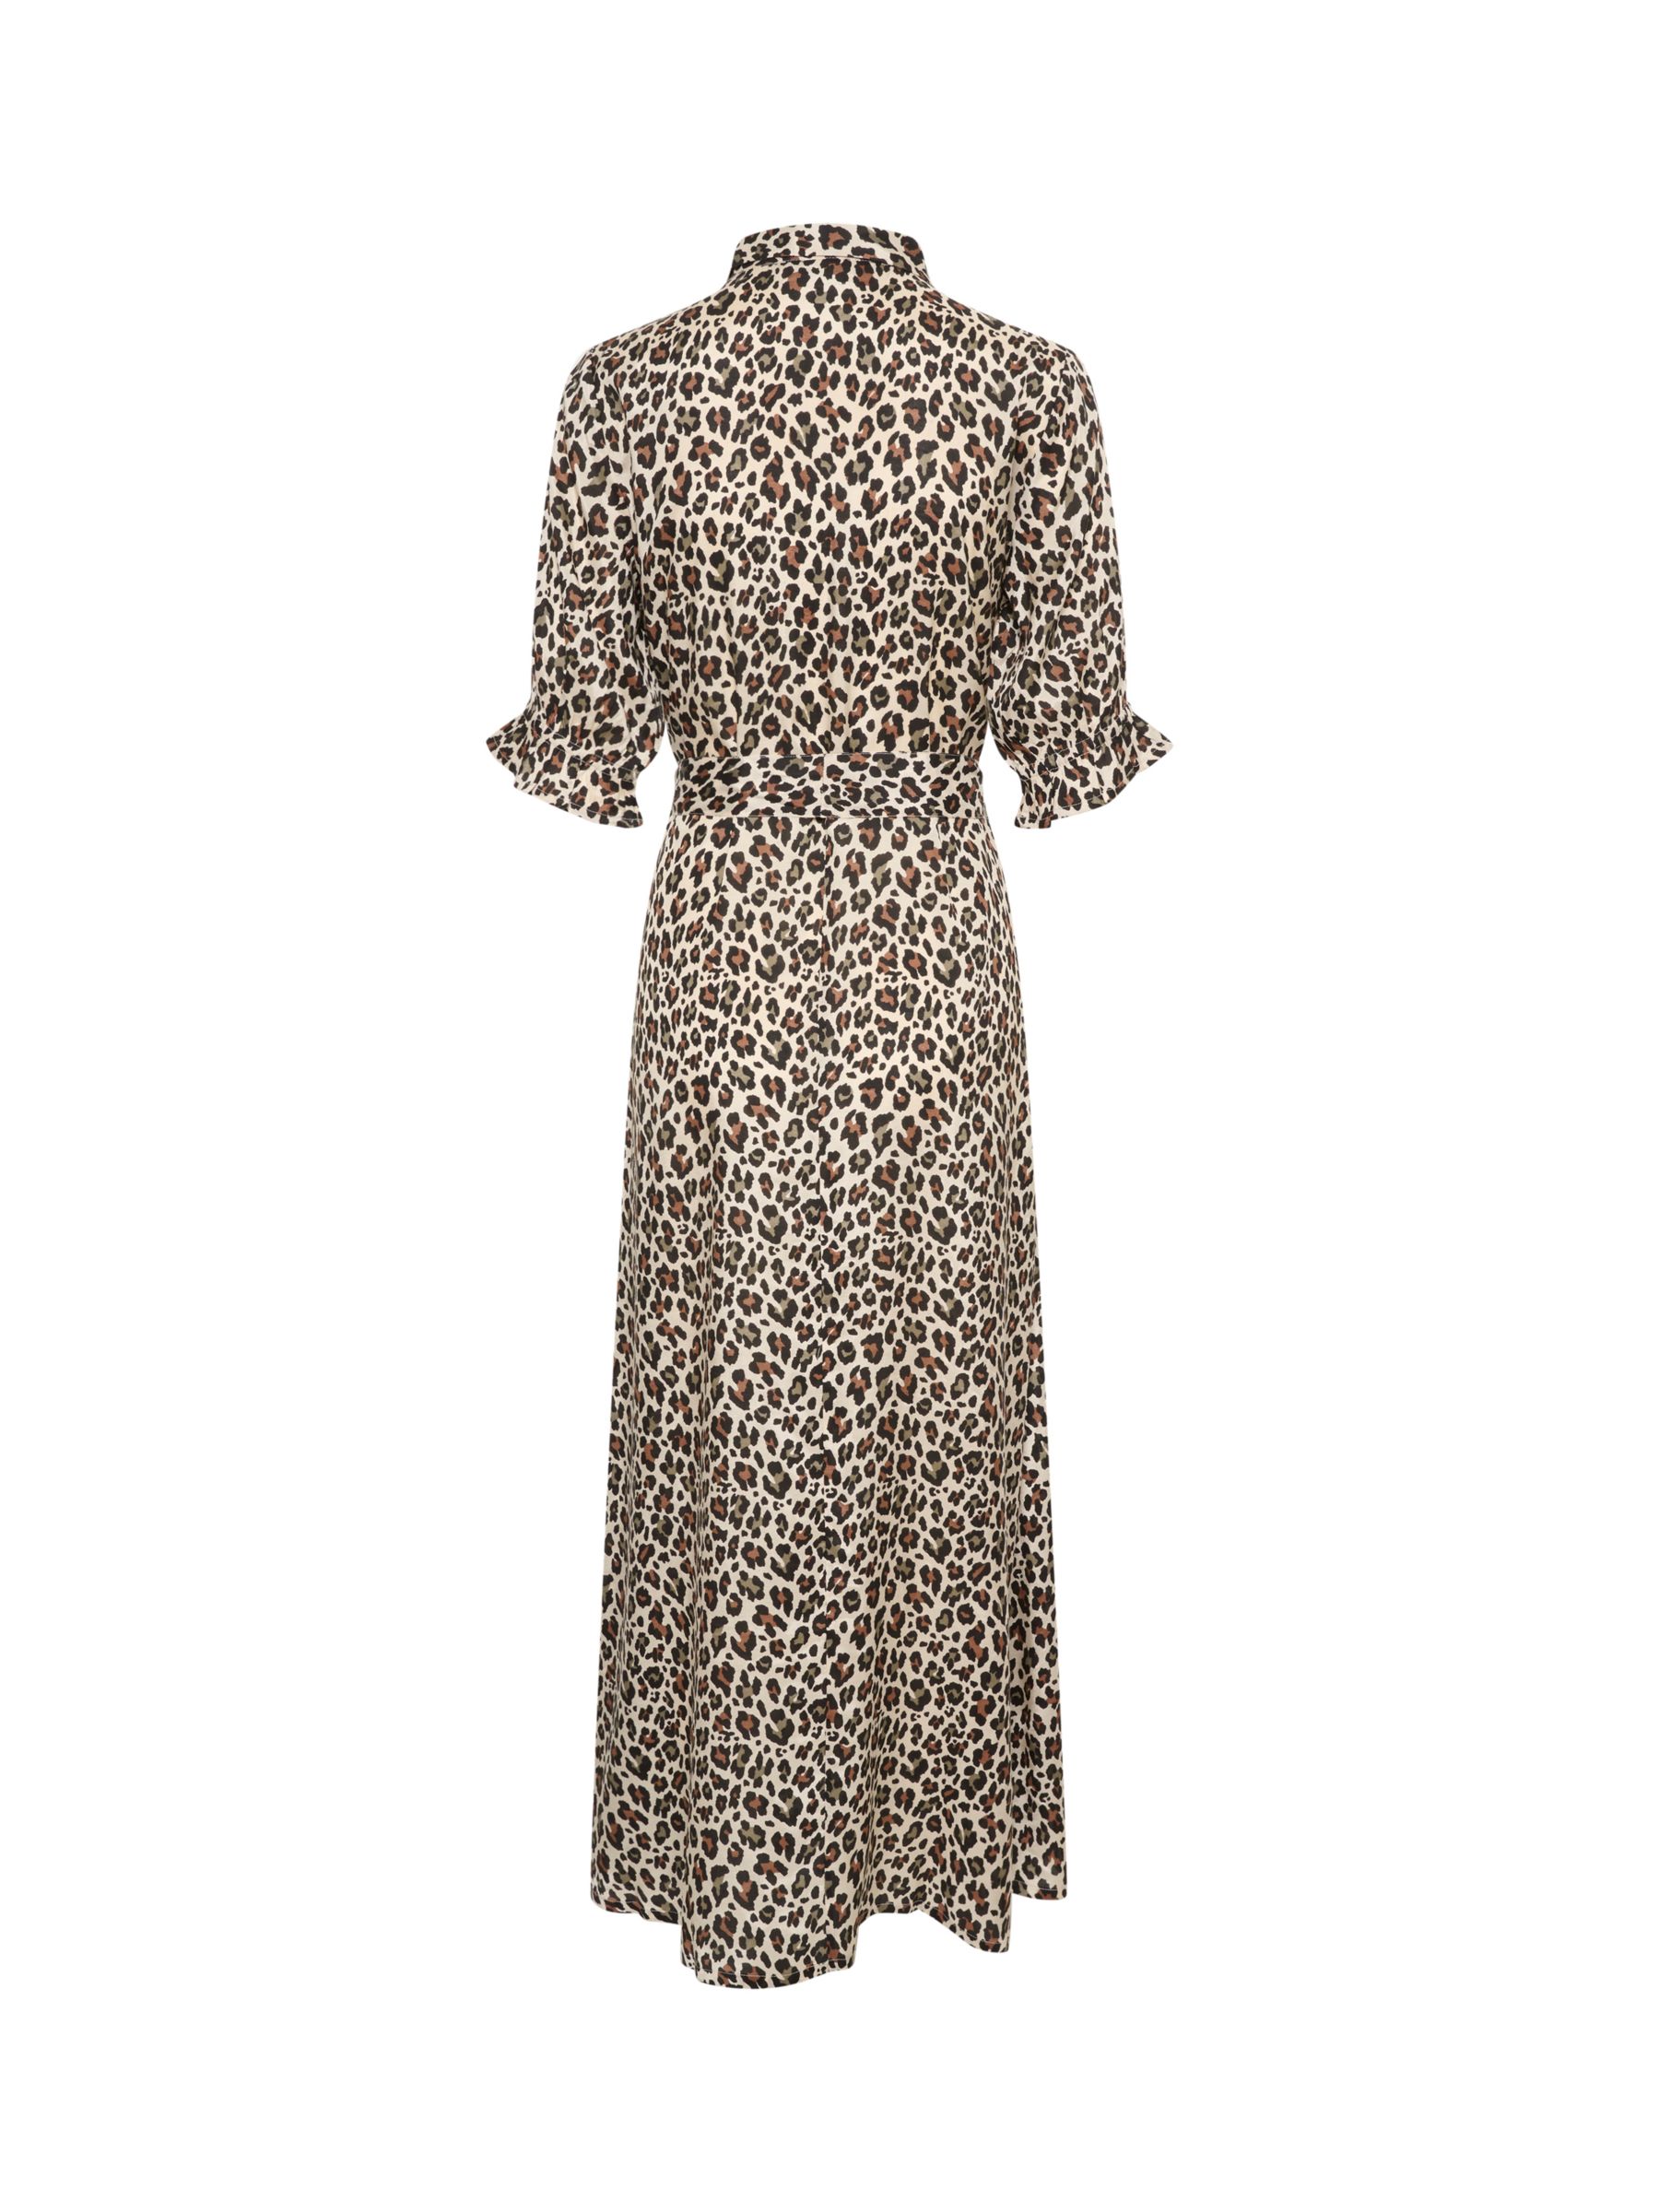 KAFFE Velana Leopard Print Shirt Maxi Dress, Multi at John Lewis & Partners